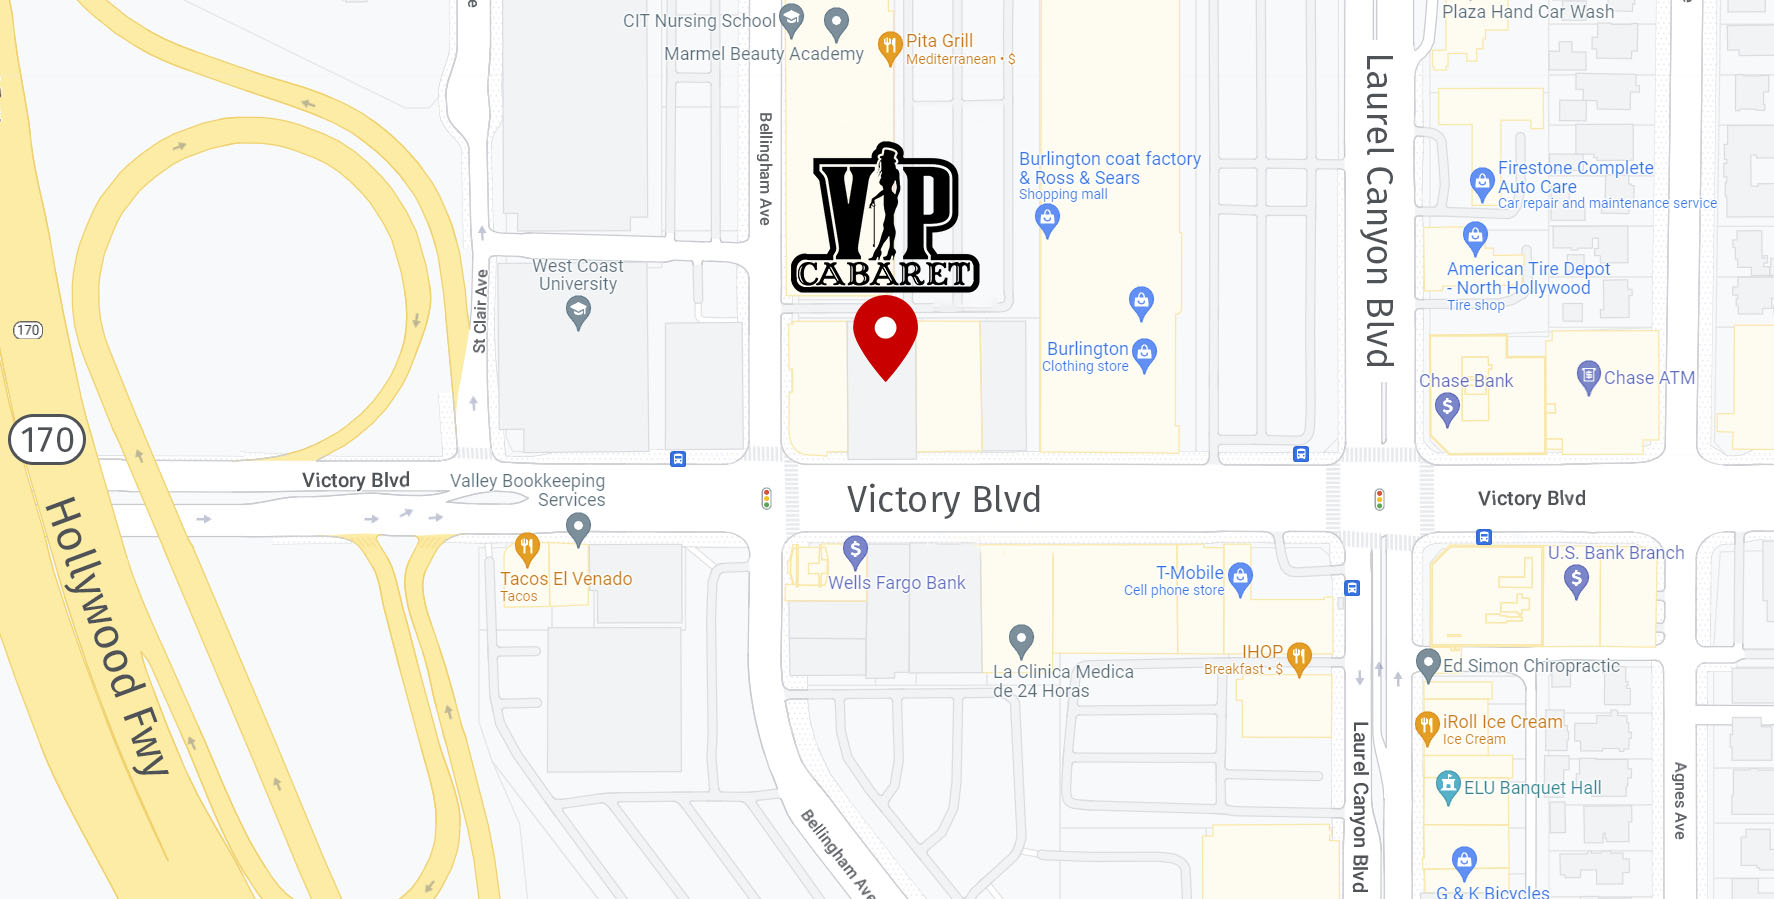 Location of VIP Cabaret Strip Club